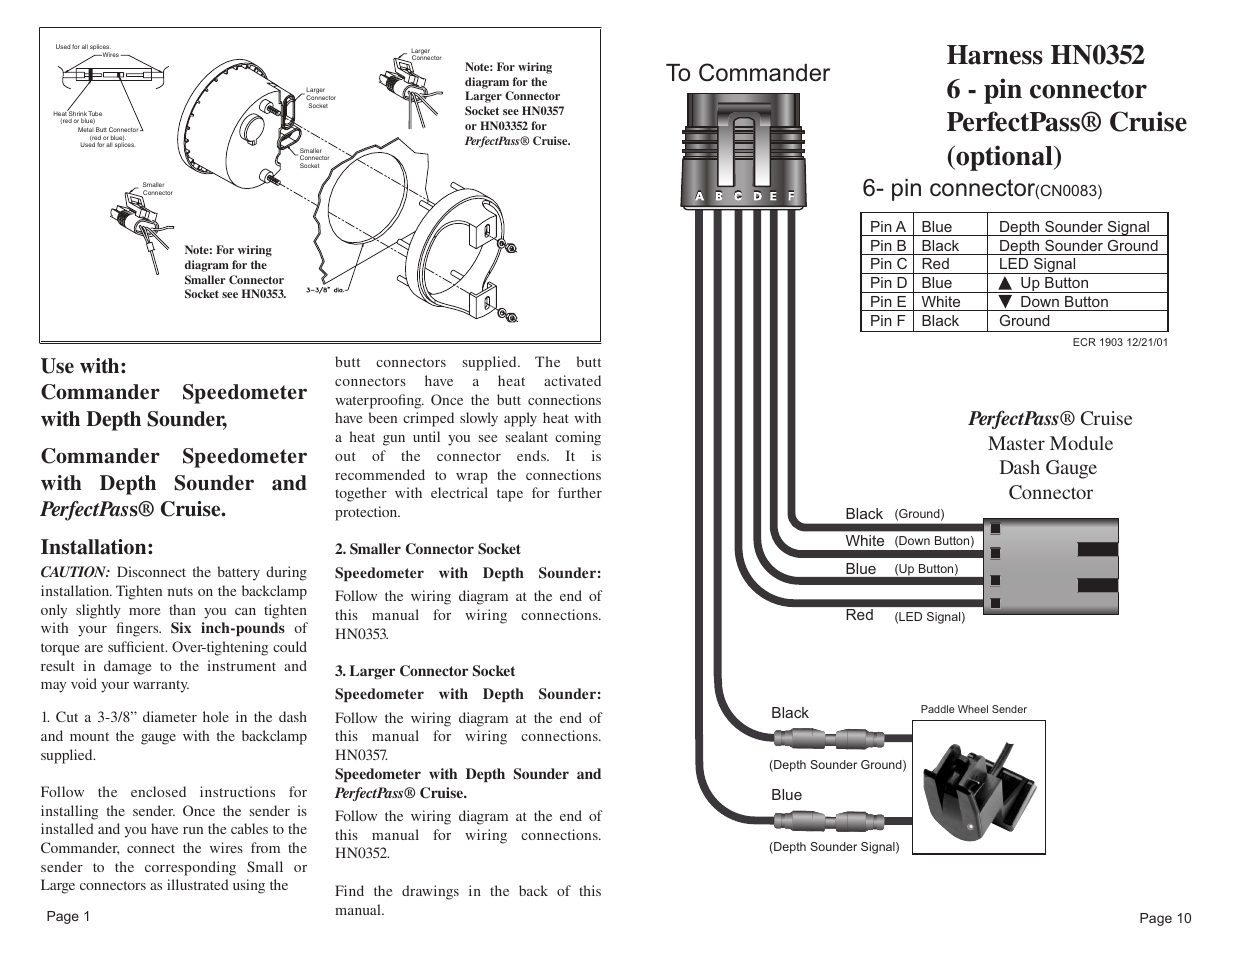 faria fuel gauge wiring diagram